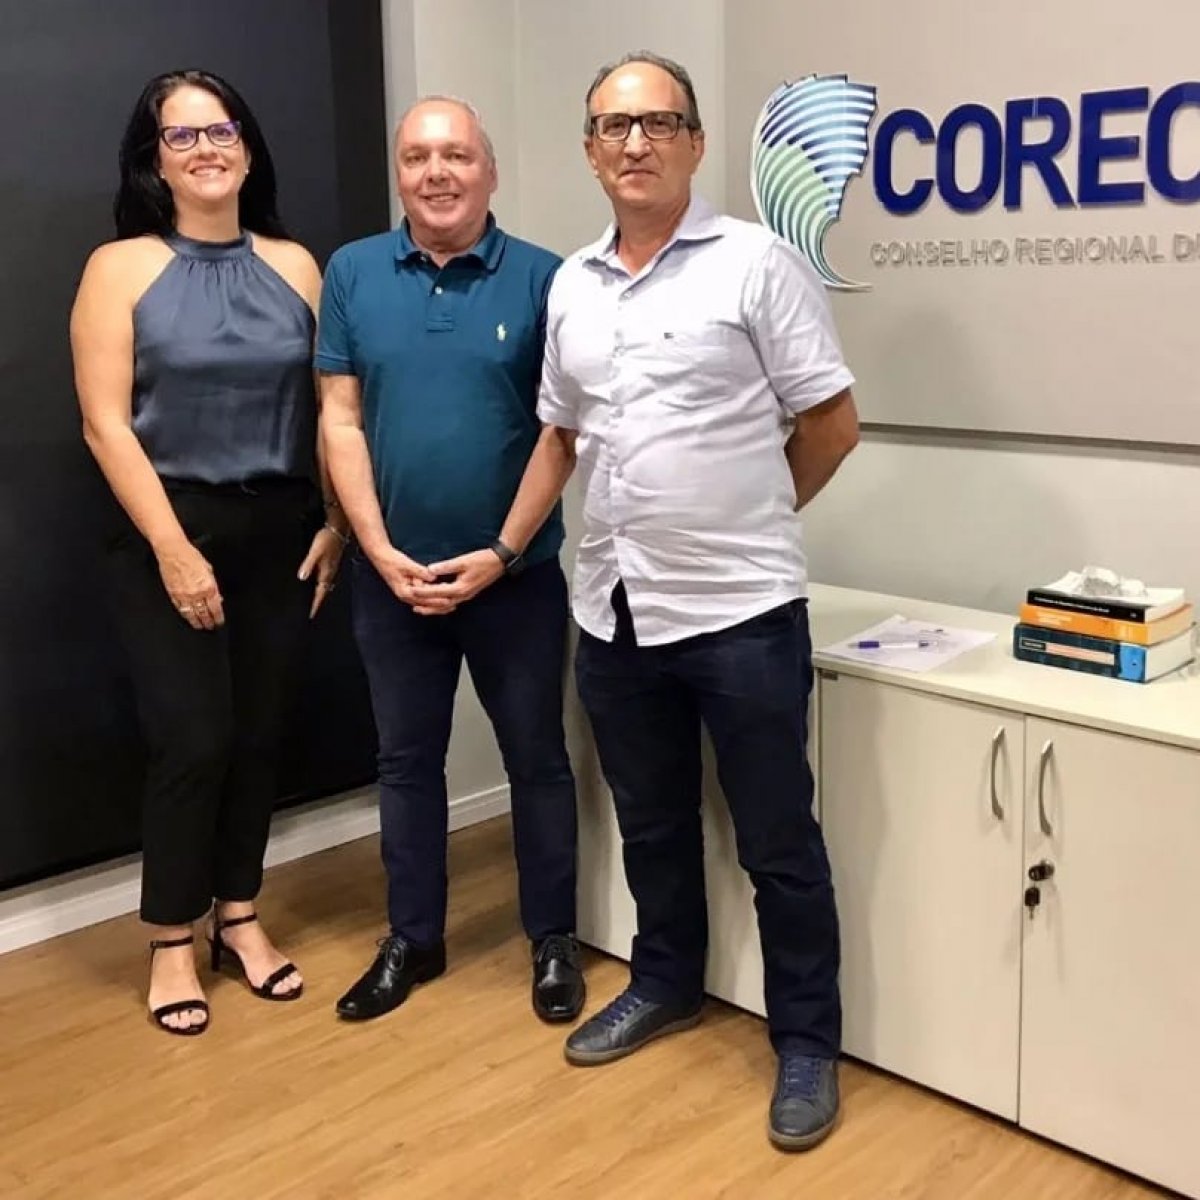 André Luiz Koerich e Eliane Maria Martins foram reconduzidos a Presidência do CORECON-SC - Corecon/SC